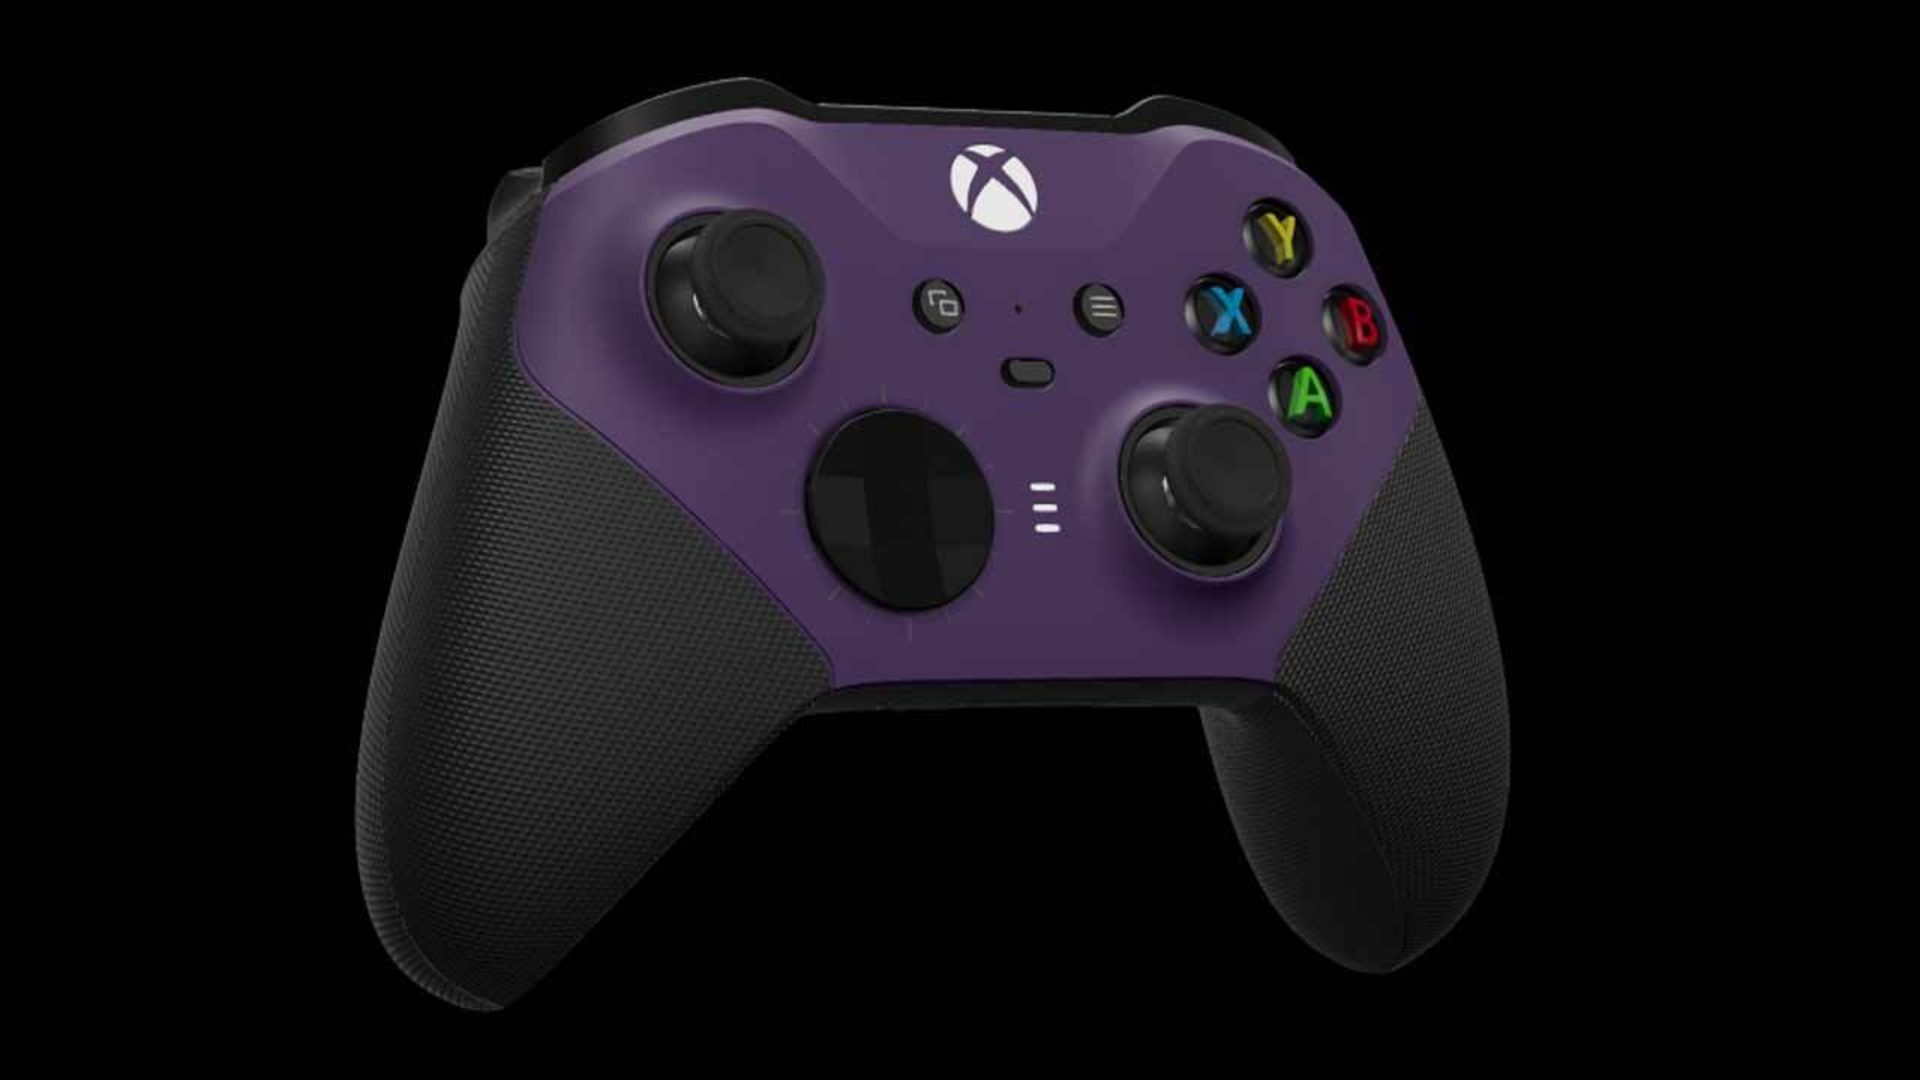 Mando inalámbrico Xbox: púrpura astral para Xbox Series X